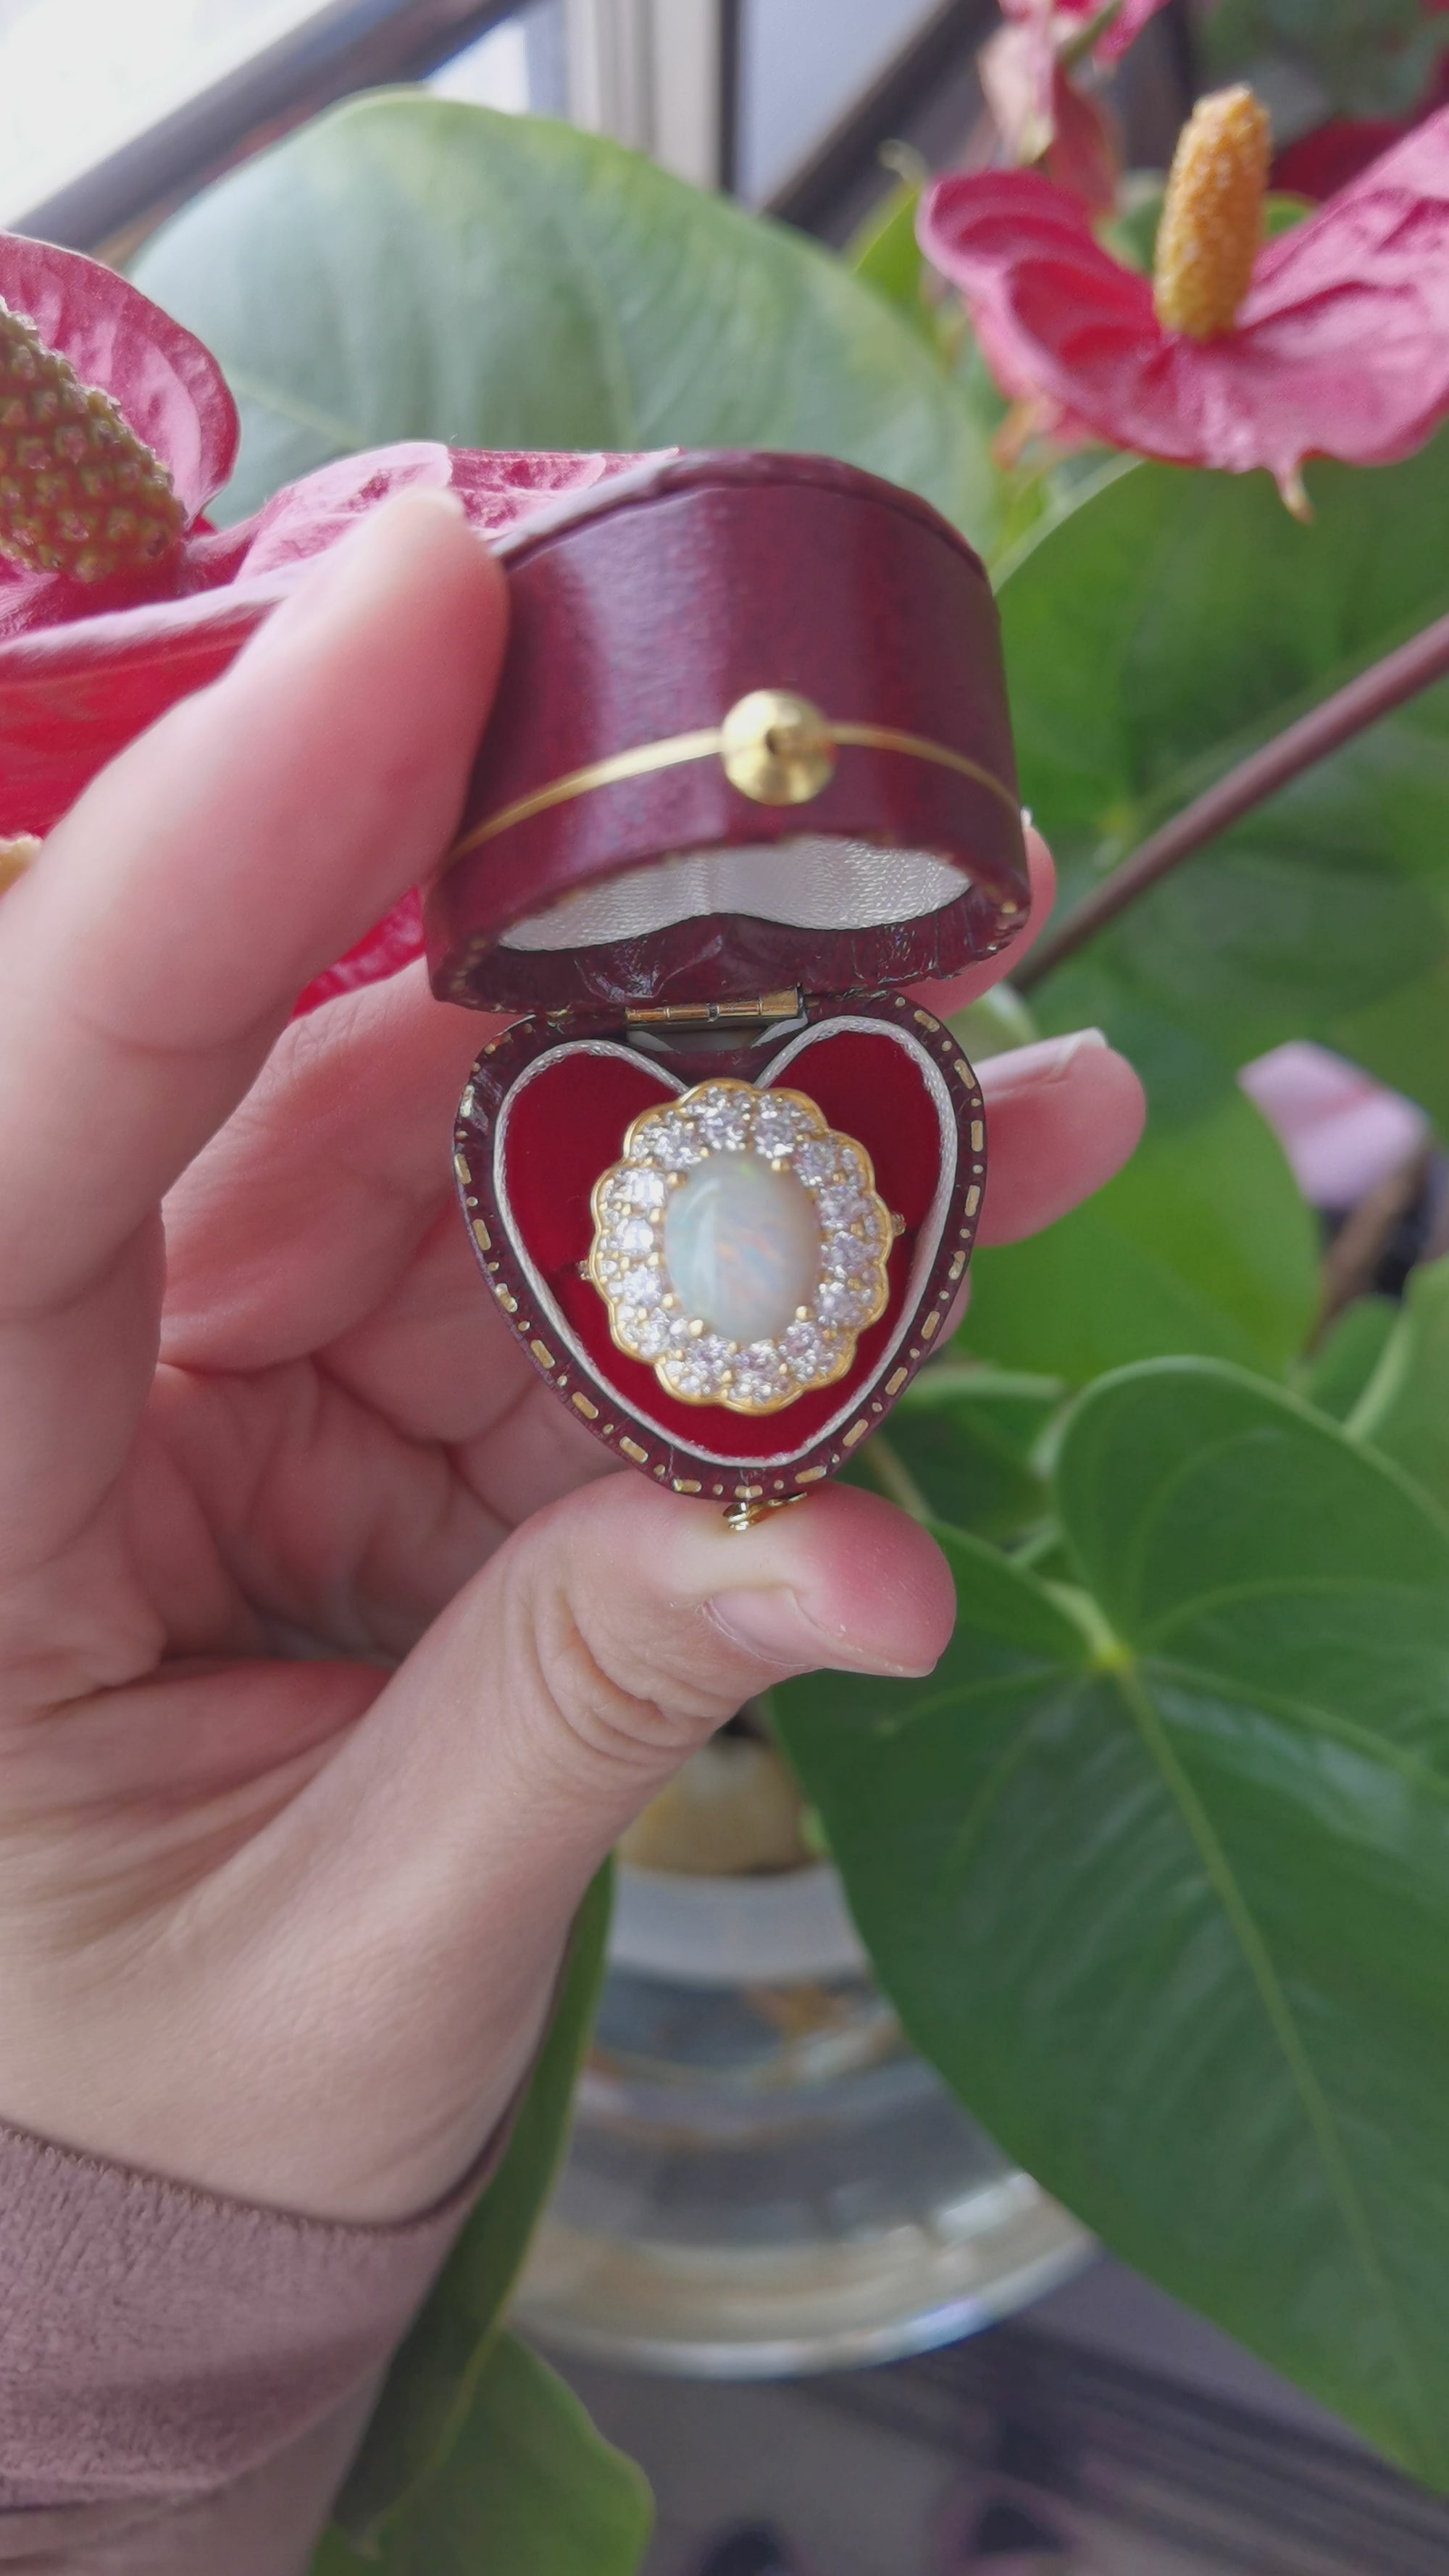 Luxury White Opal Ring, 8X10mm